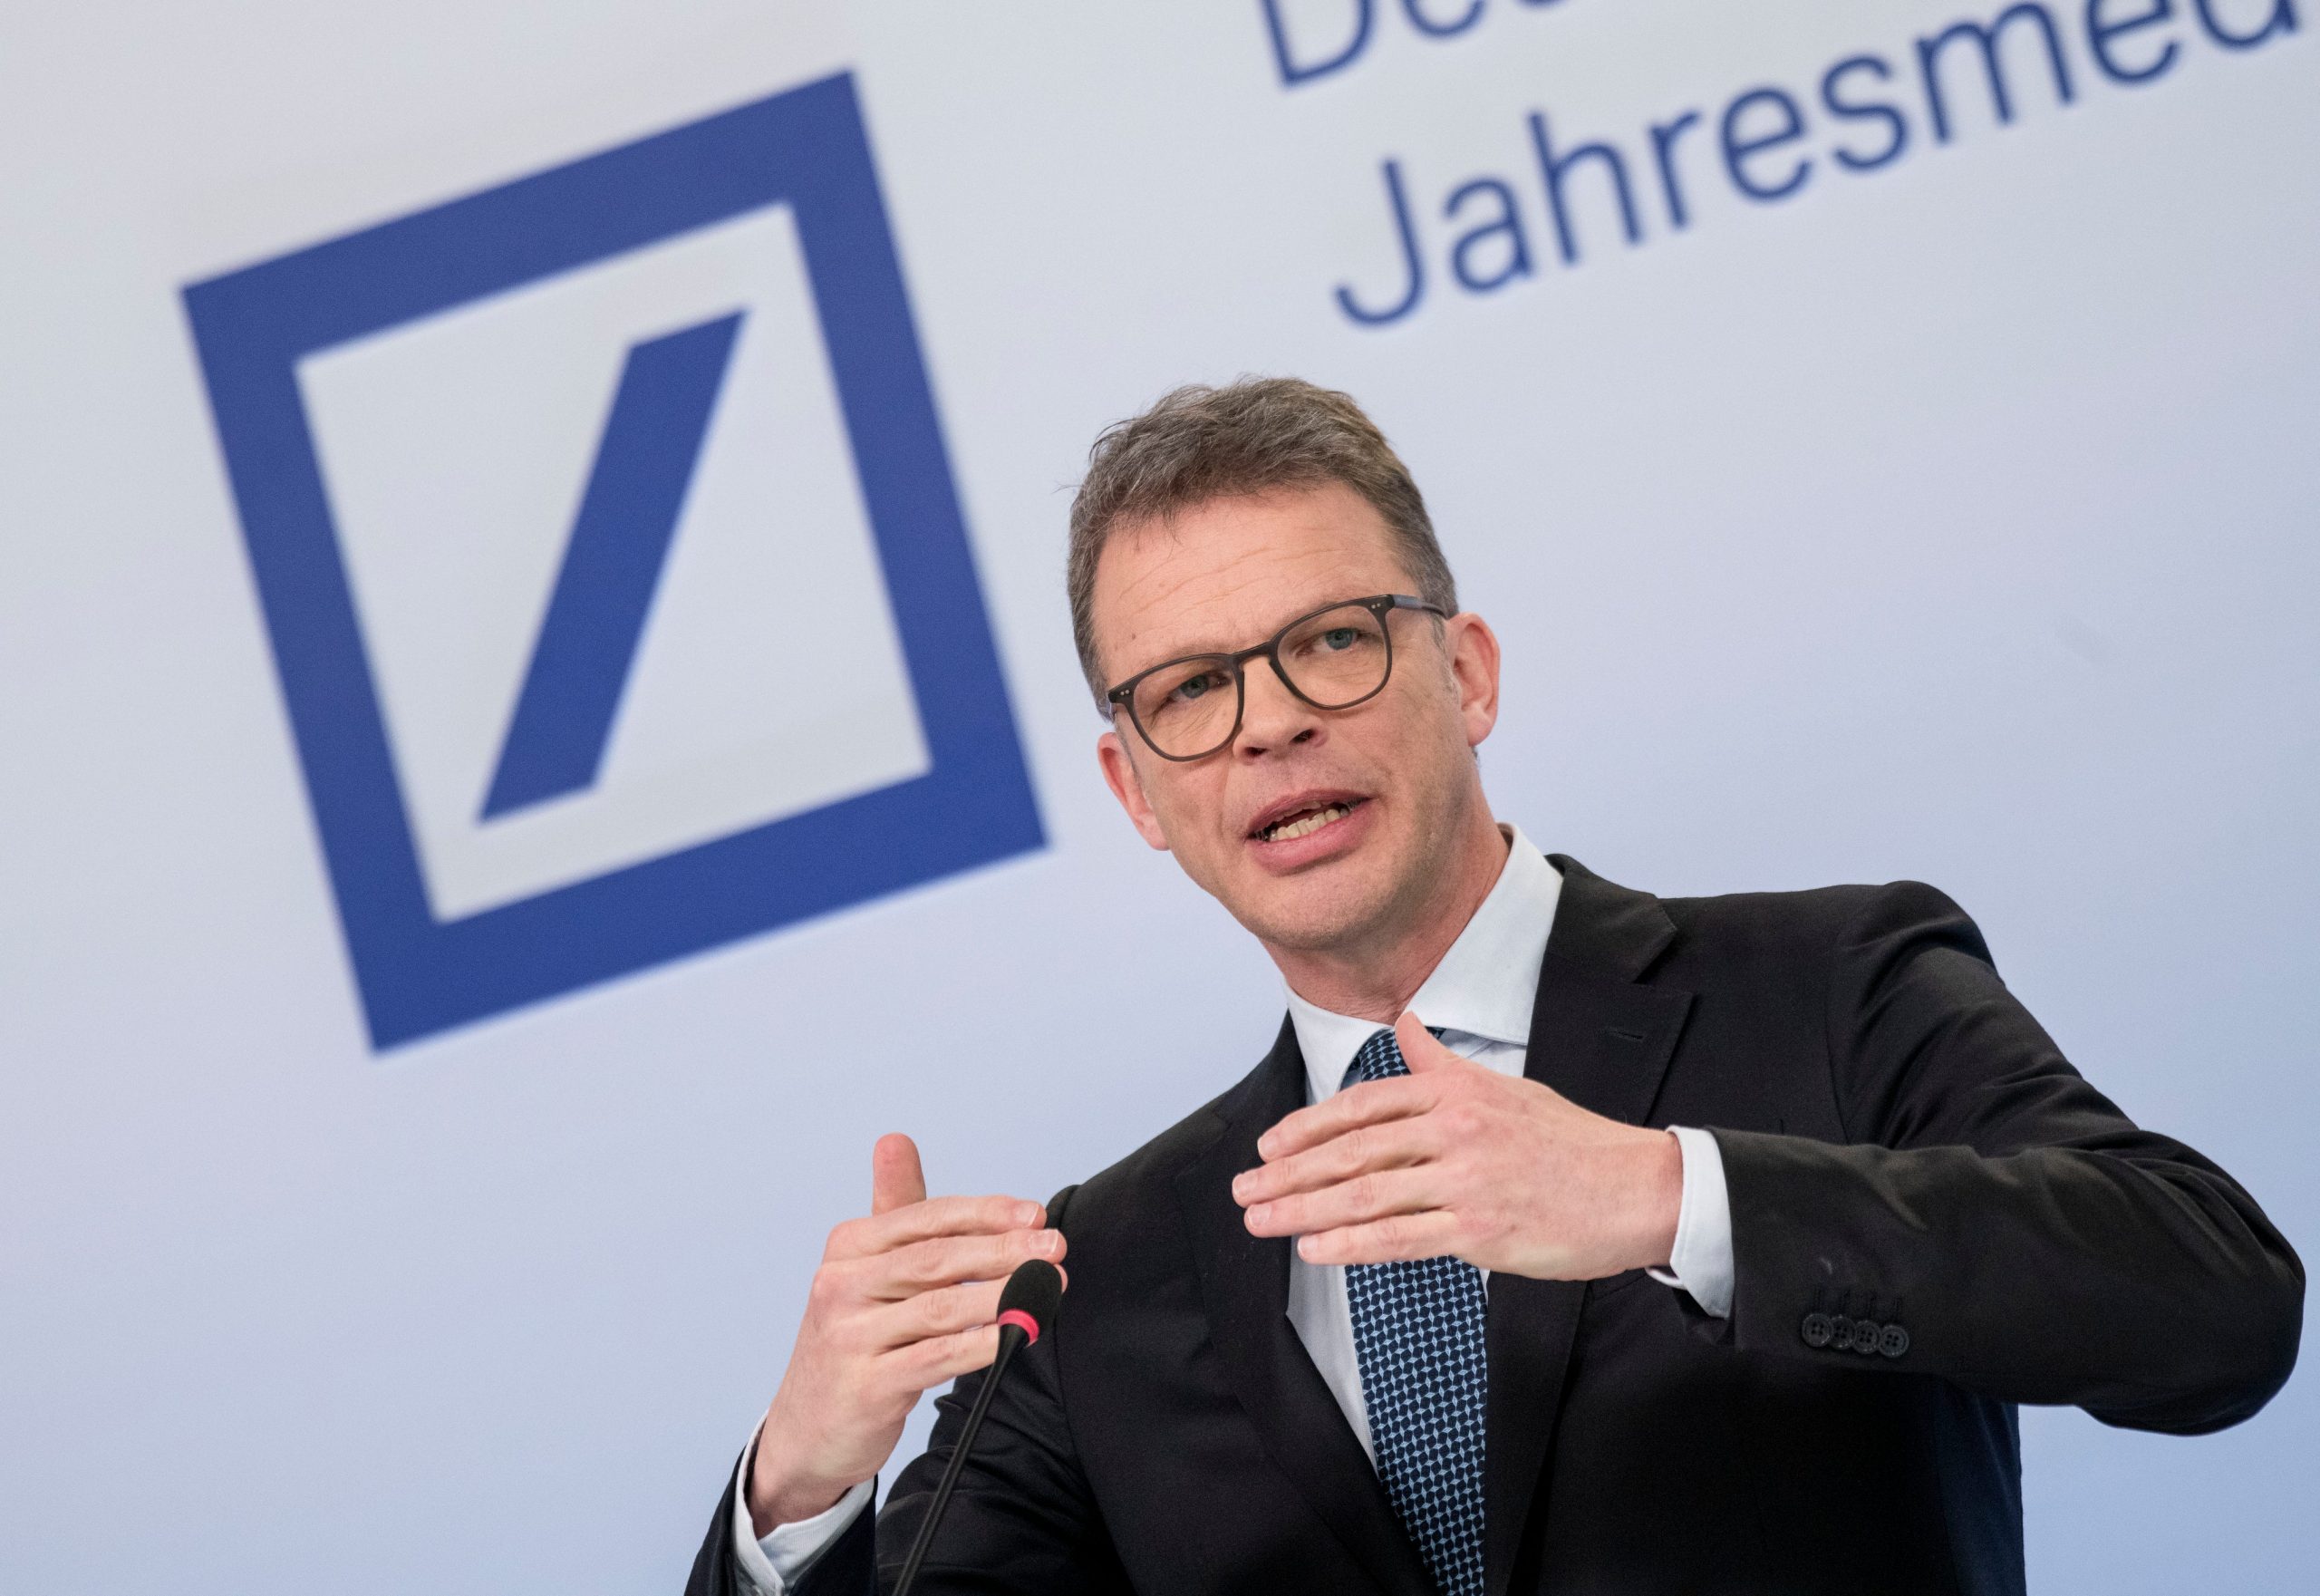 Deutsche Bank CEO Christian Sewing